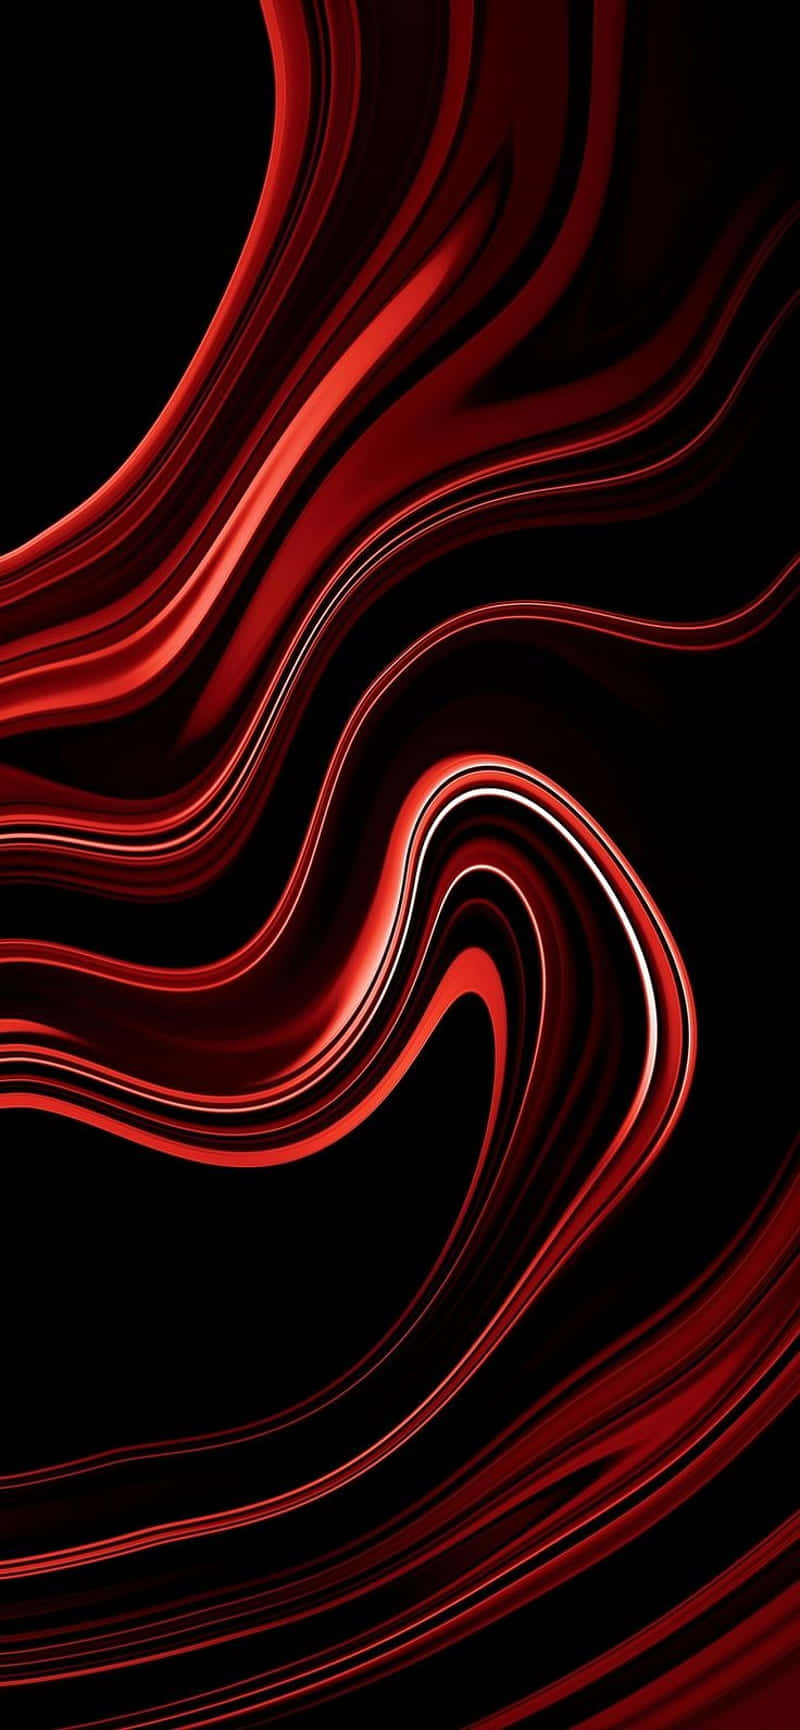 Red And Black Swirls Background Illustration